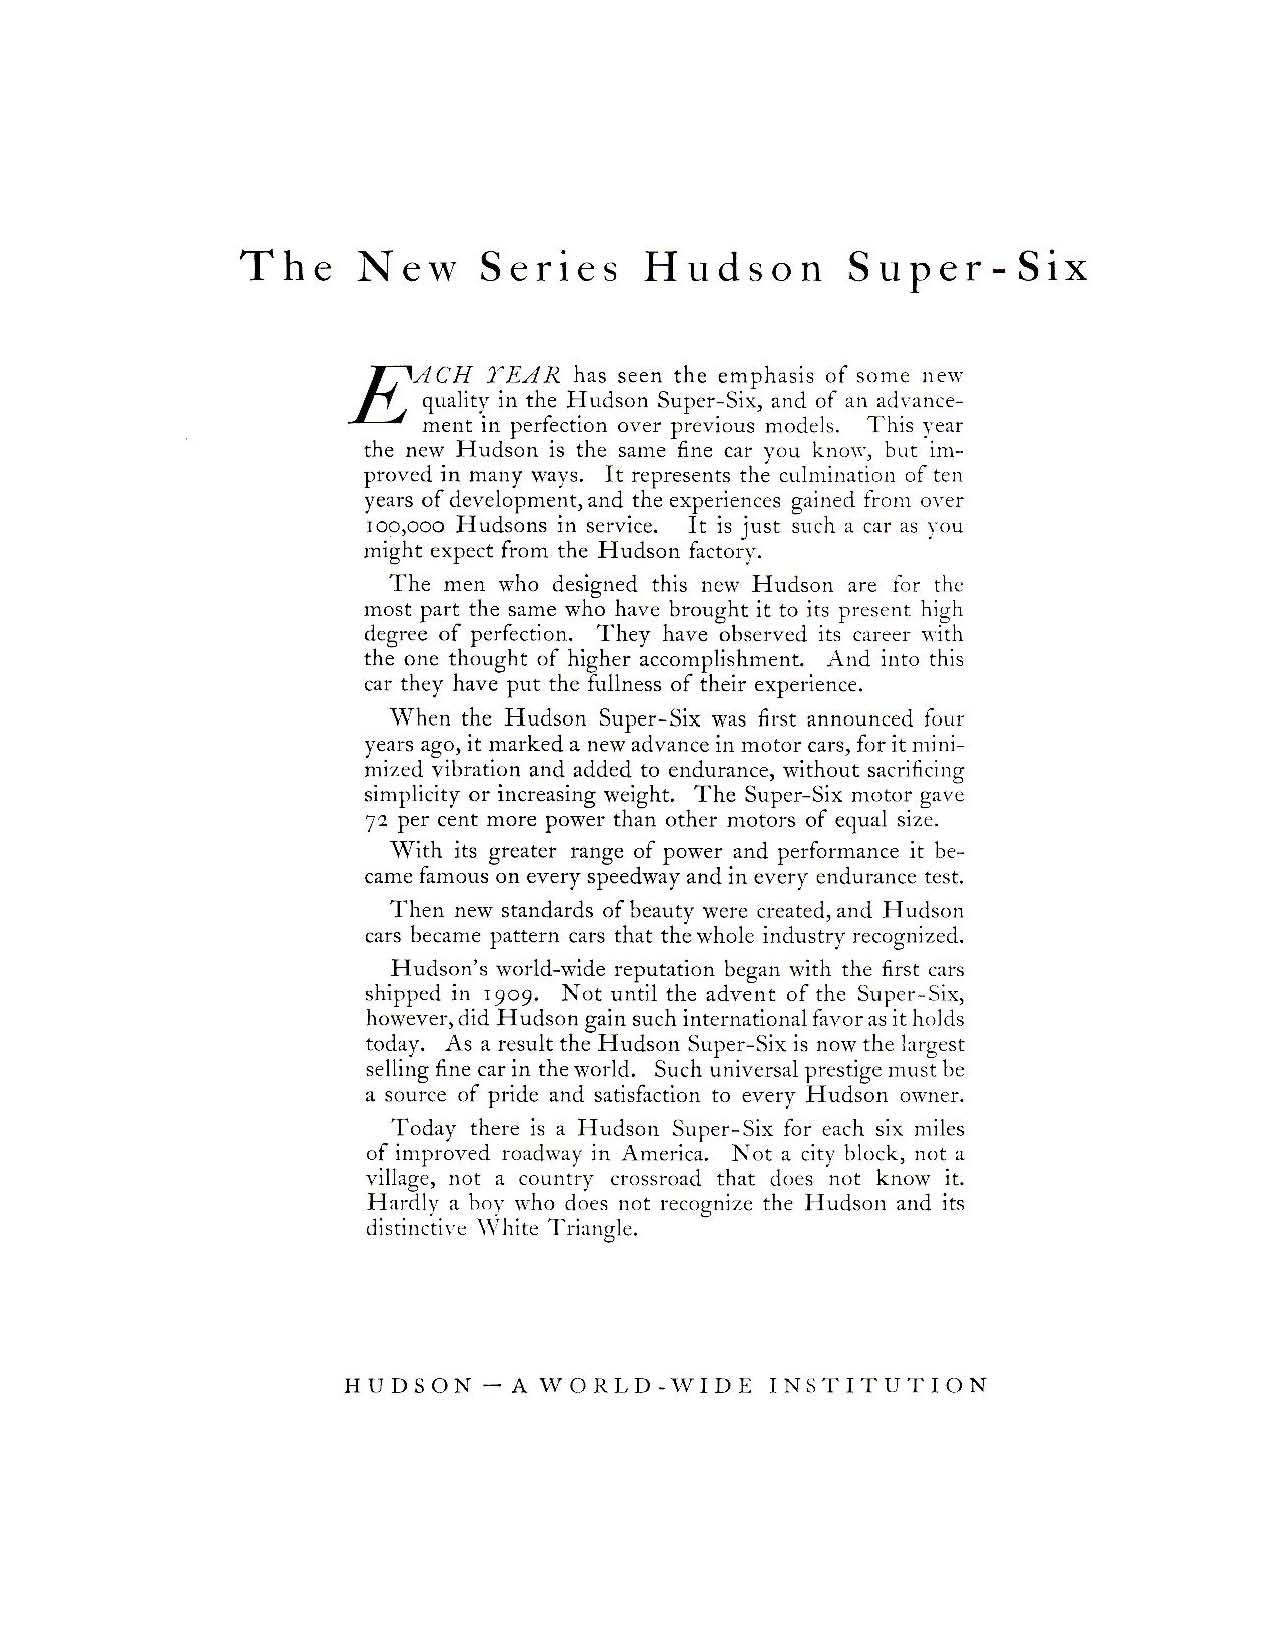 1919 Hudson Super-Six Brochure Page 1